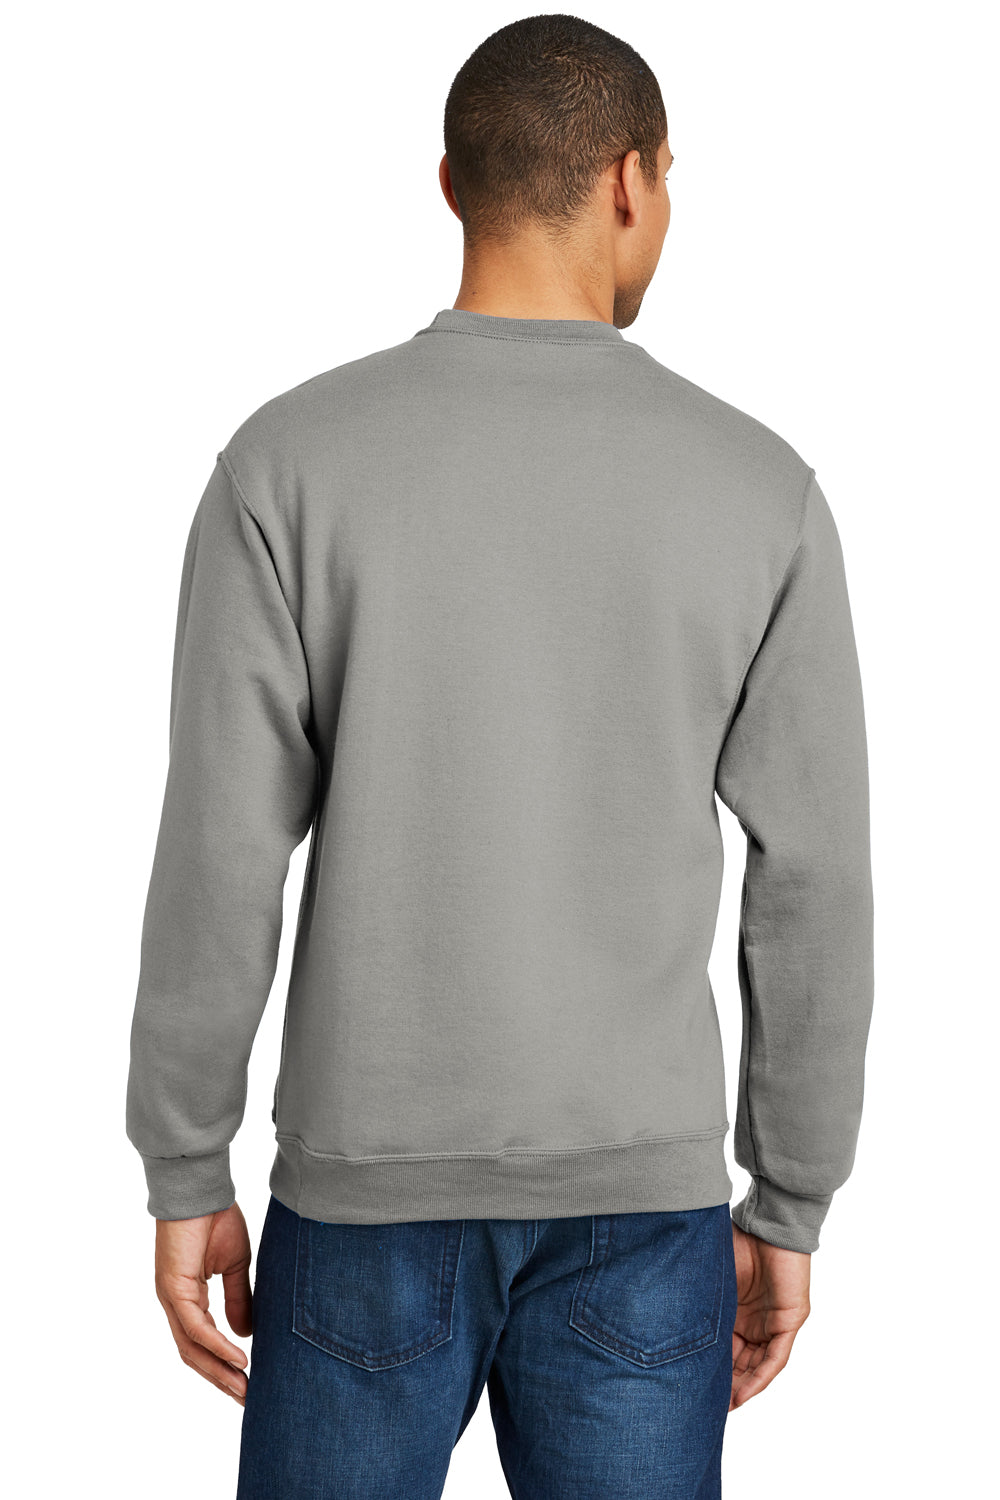 Jerzees 562M/562/562MR Mens NuBlend Fleece Crewneck Sweatshirt Rock Grey Back